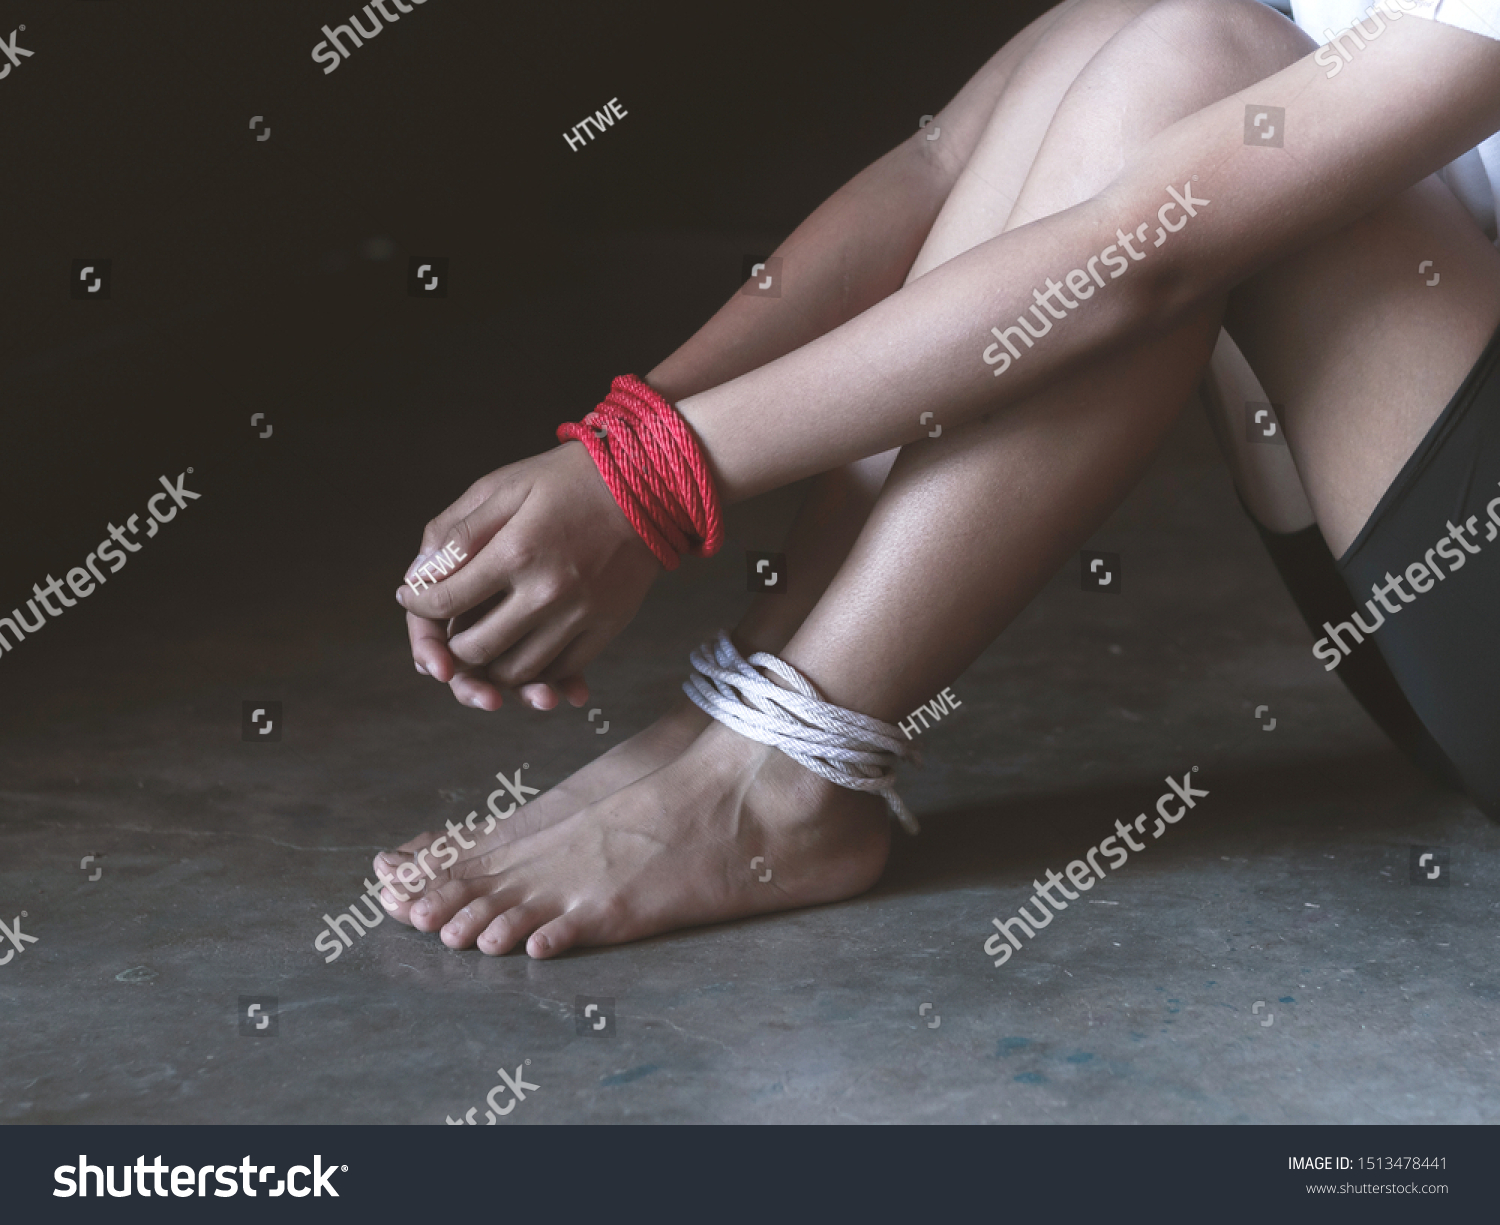 doris greene add girls tied and tortured photo